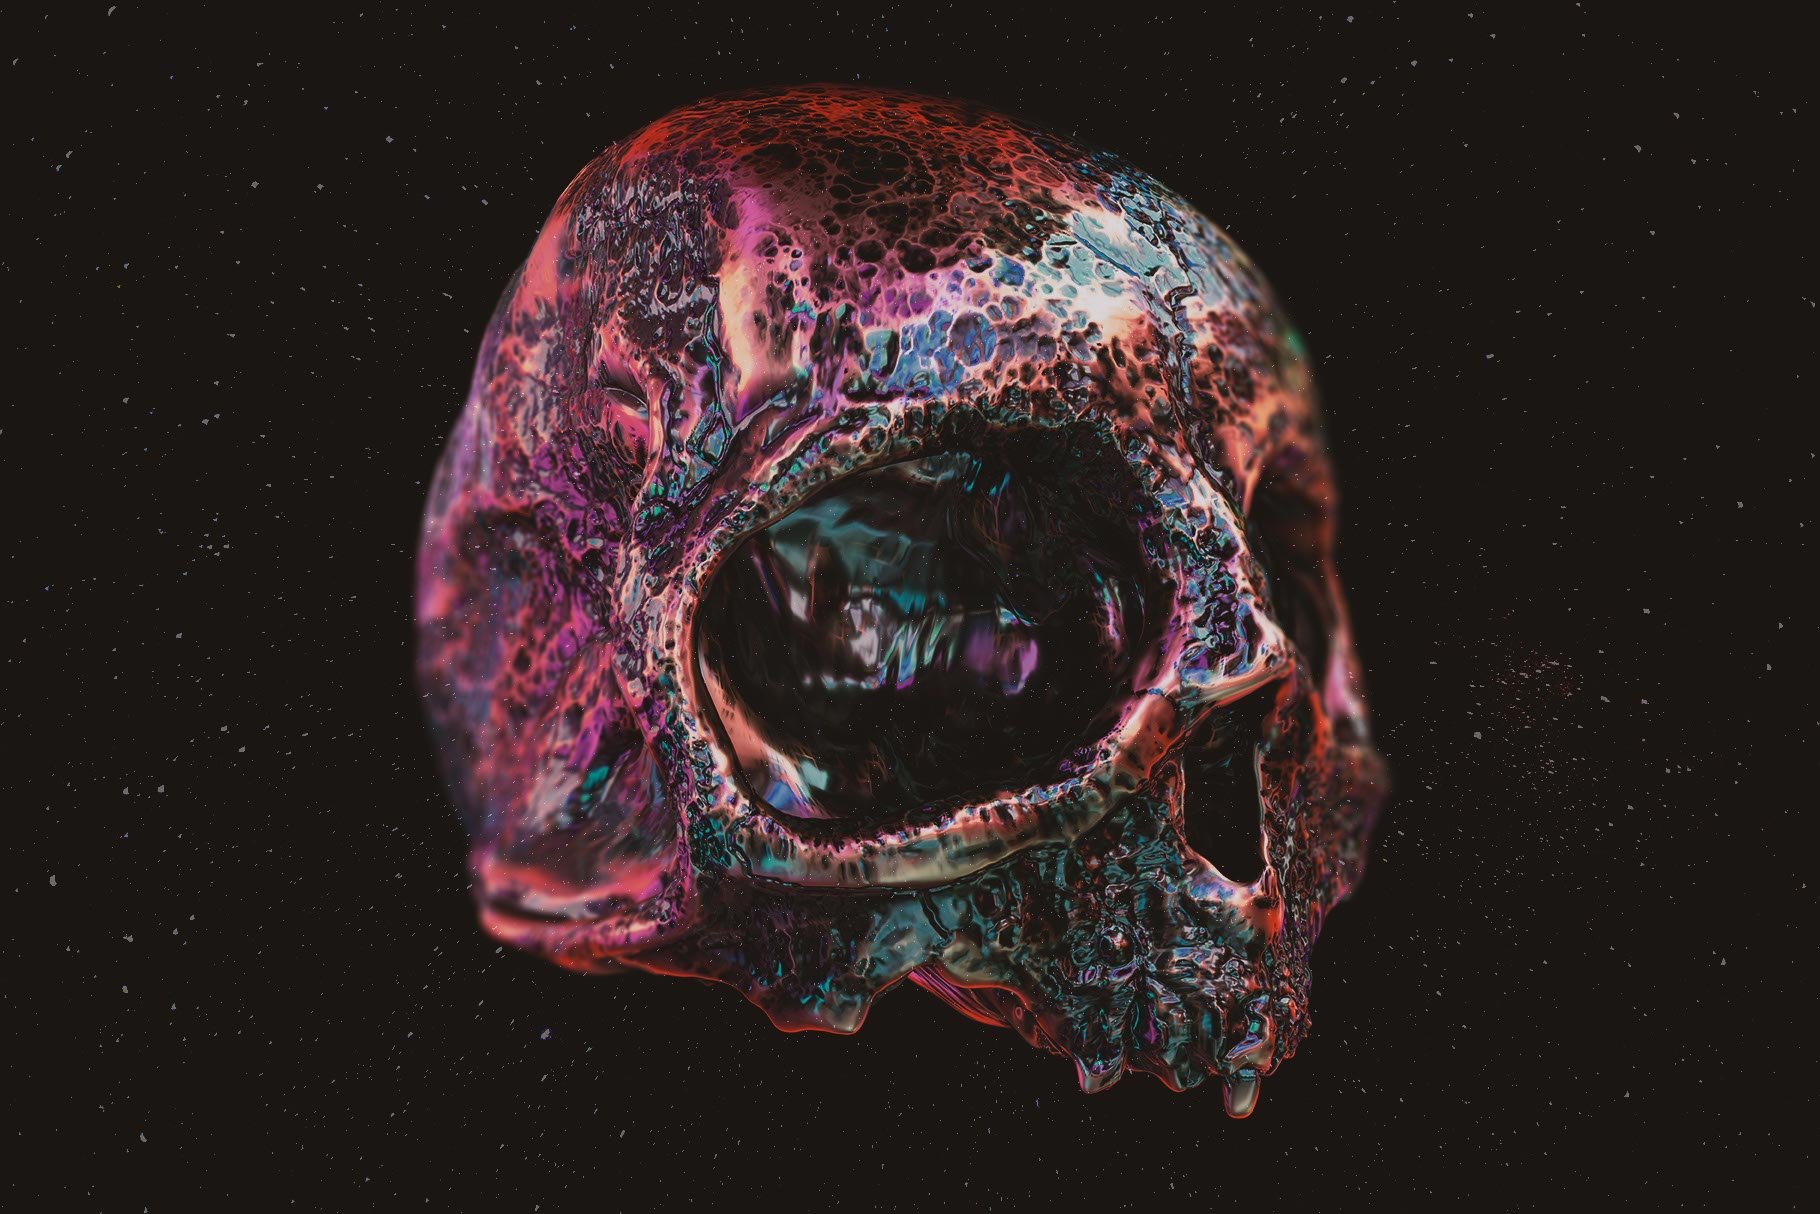 Skulls 108个高分辨率骷髅头骨逼真骨骼金属纹理PNG素材 图片素材 第12张